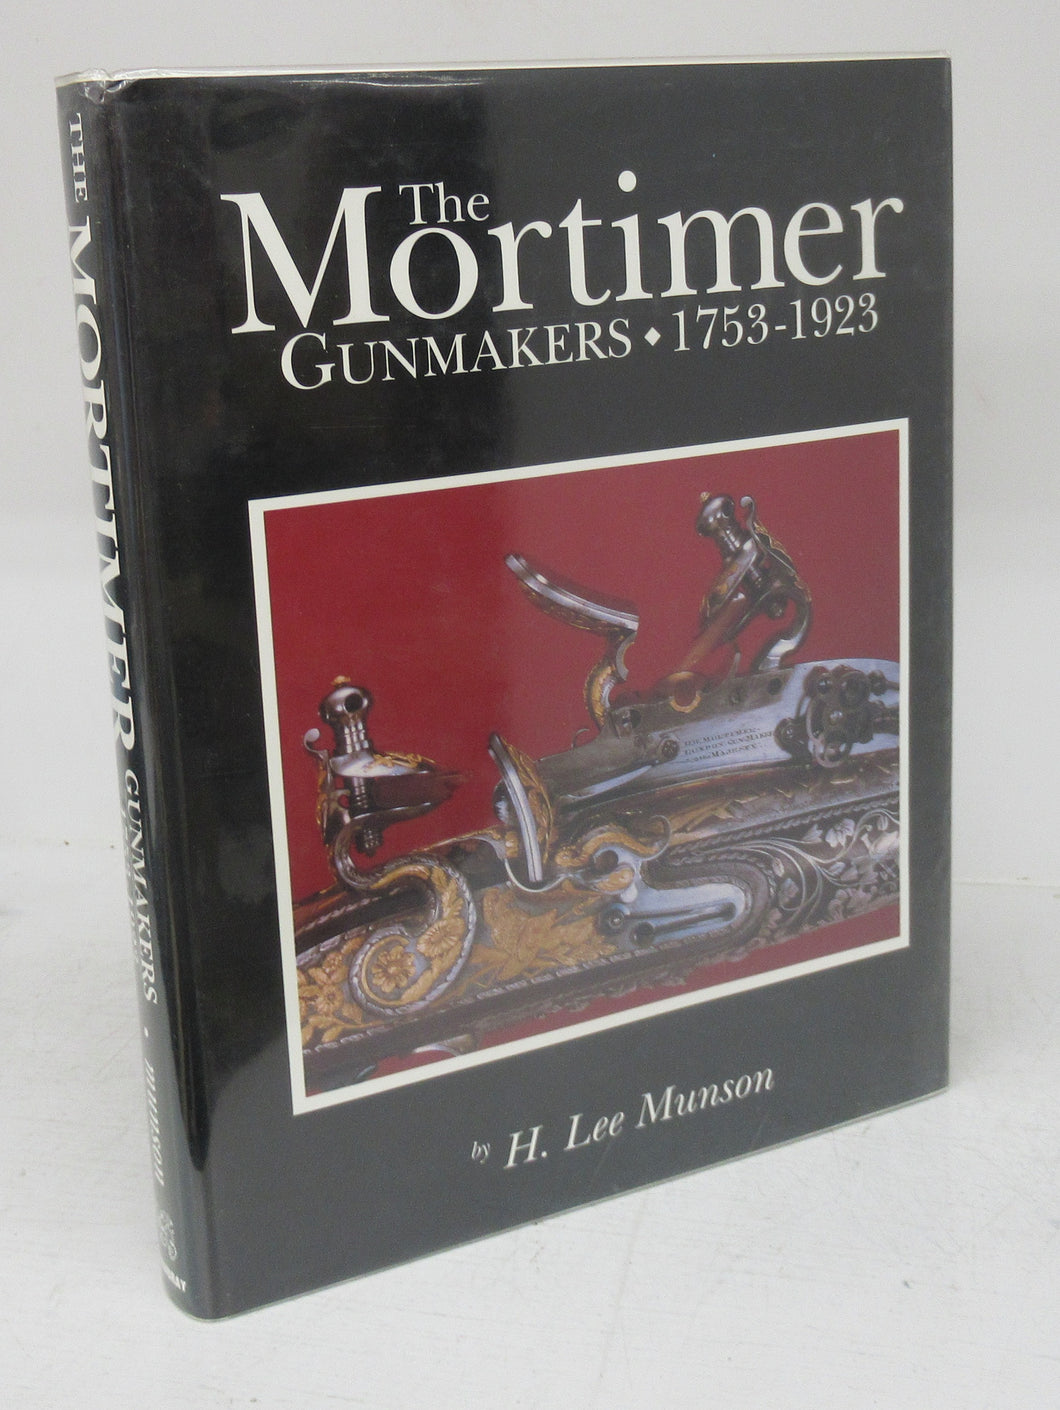 The Mortimer Gunmakers 1753-1923